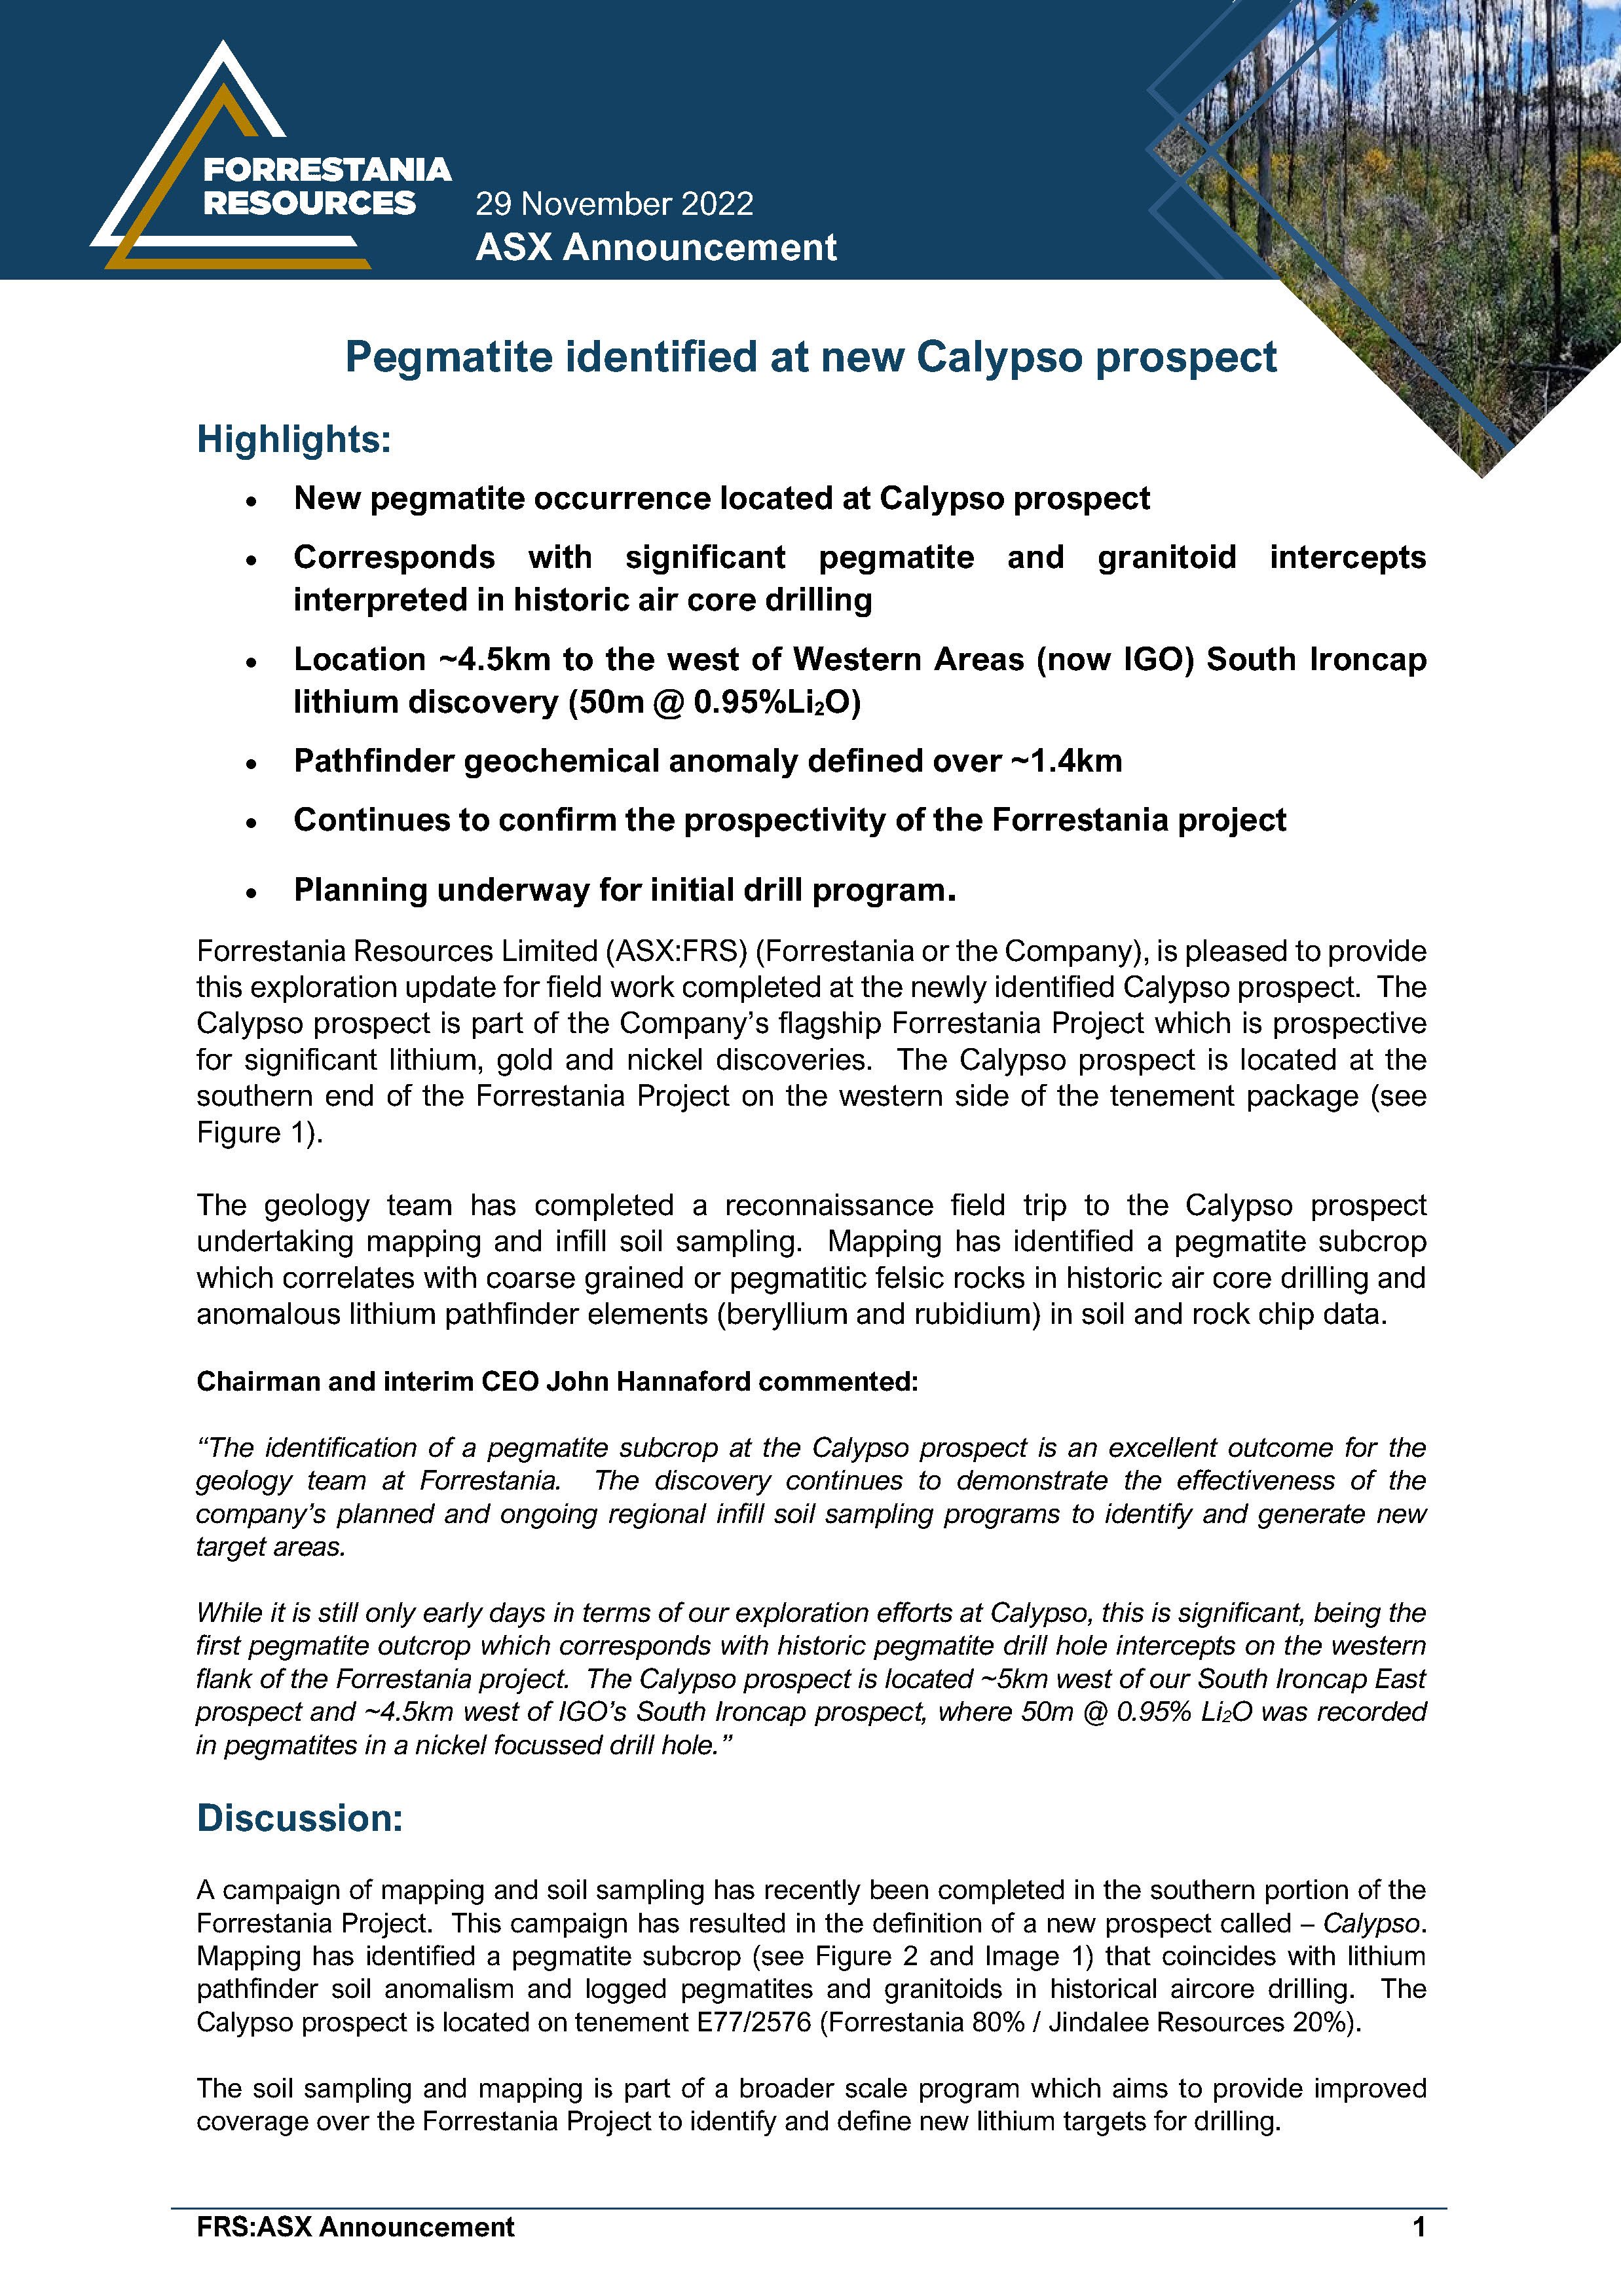 Pegmatite identified at new Calypso prospect